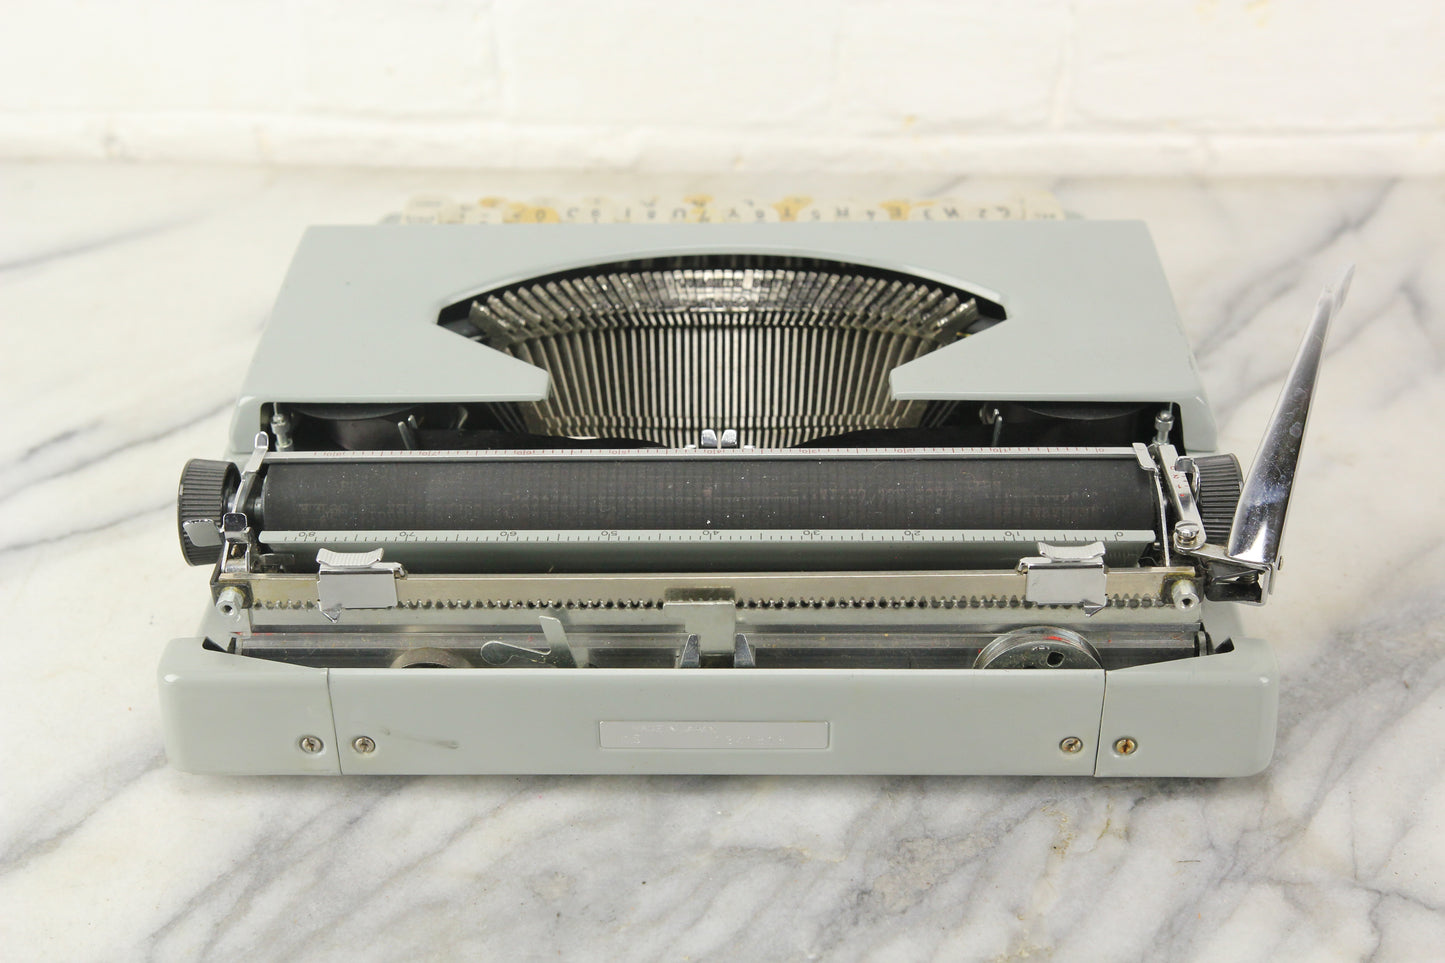 Royal Signet Portable Typewriter with Case, Made in Japan, 1971